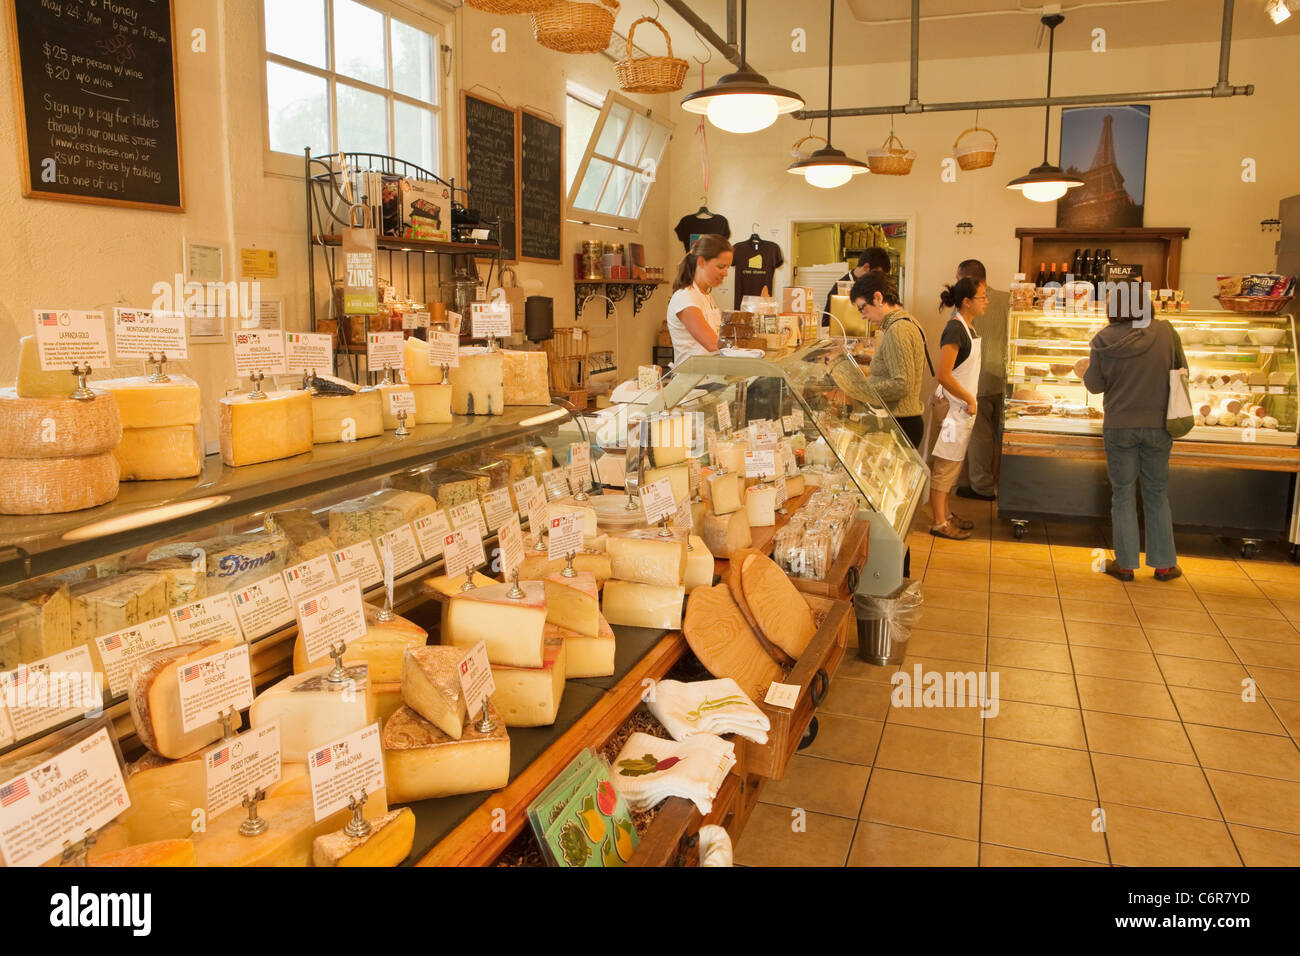 C'est Cheese, a cheese shop in Santa Barbara, California, United States of America Stock Photo